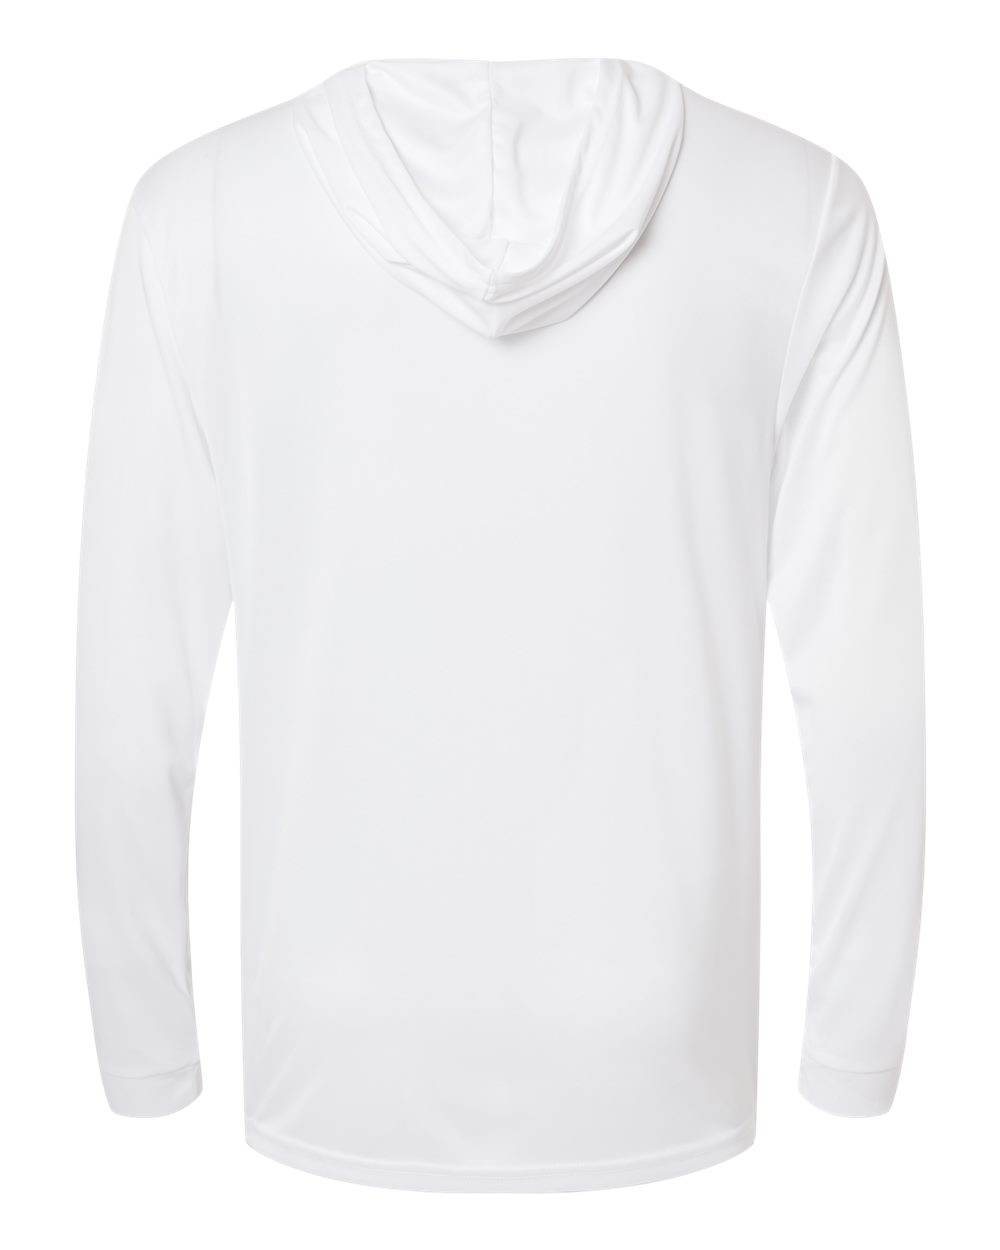 Paragon 220 - Bahama Performance Hooded Long Sleeve T-Shirt